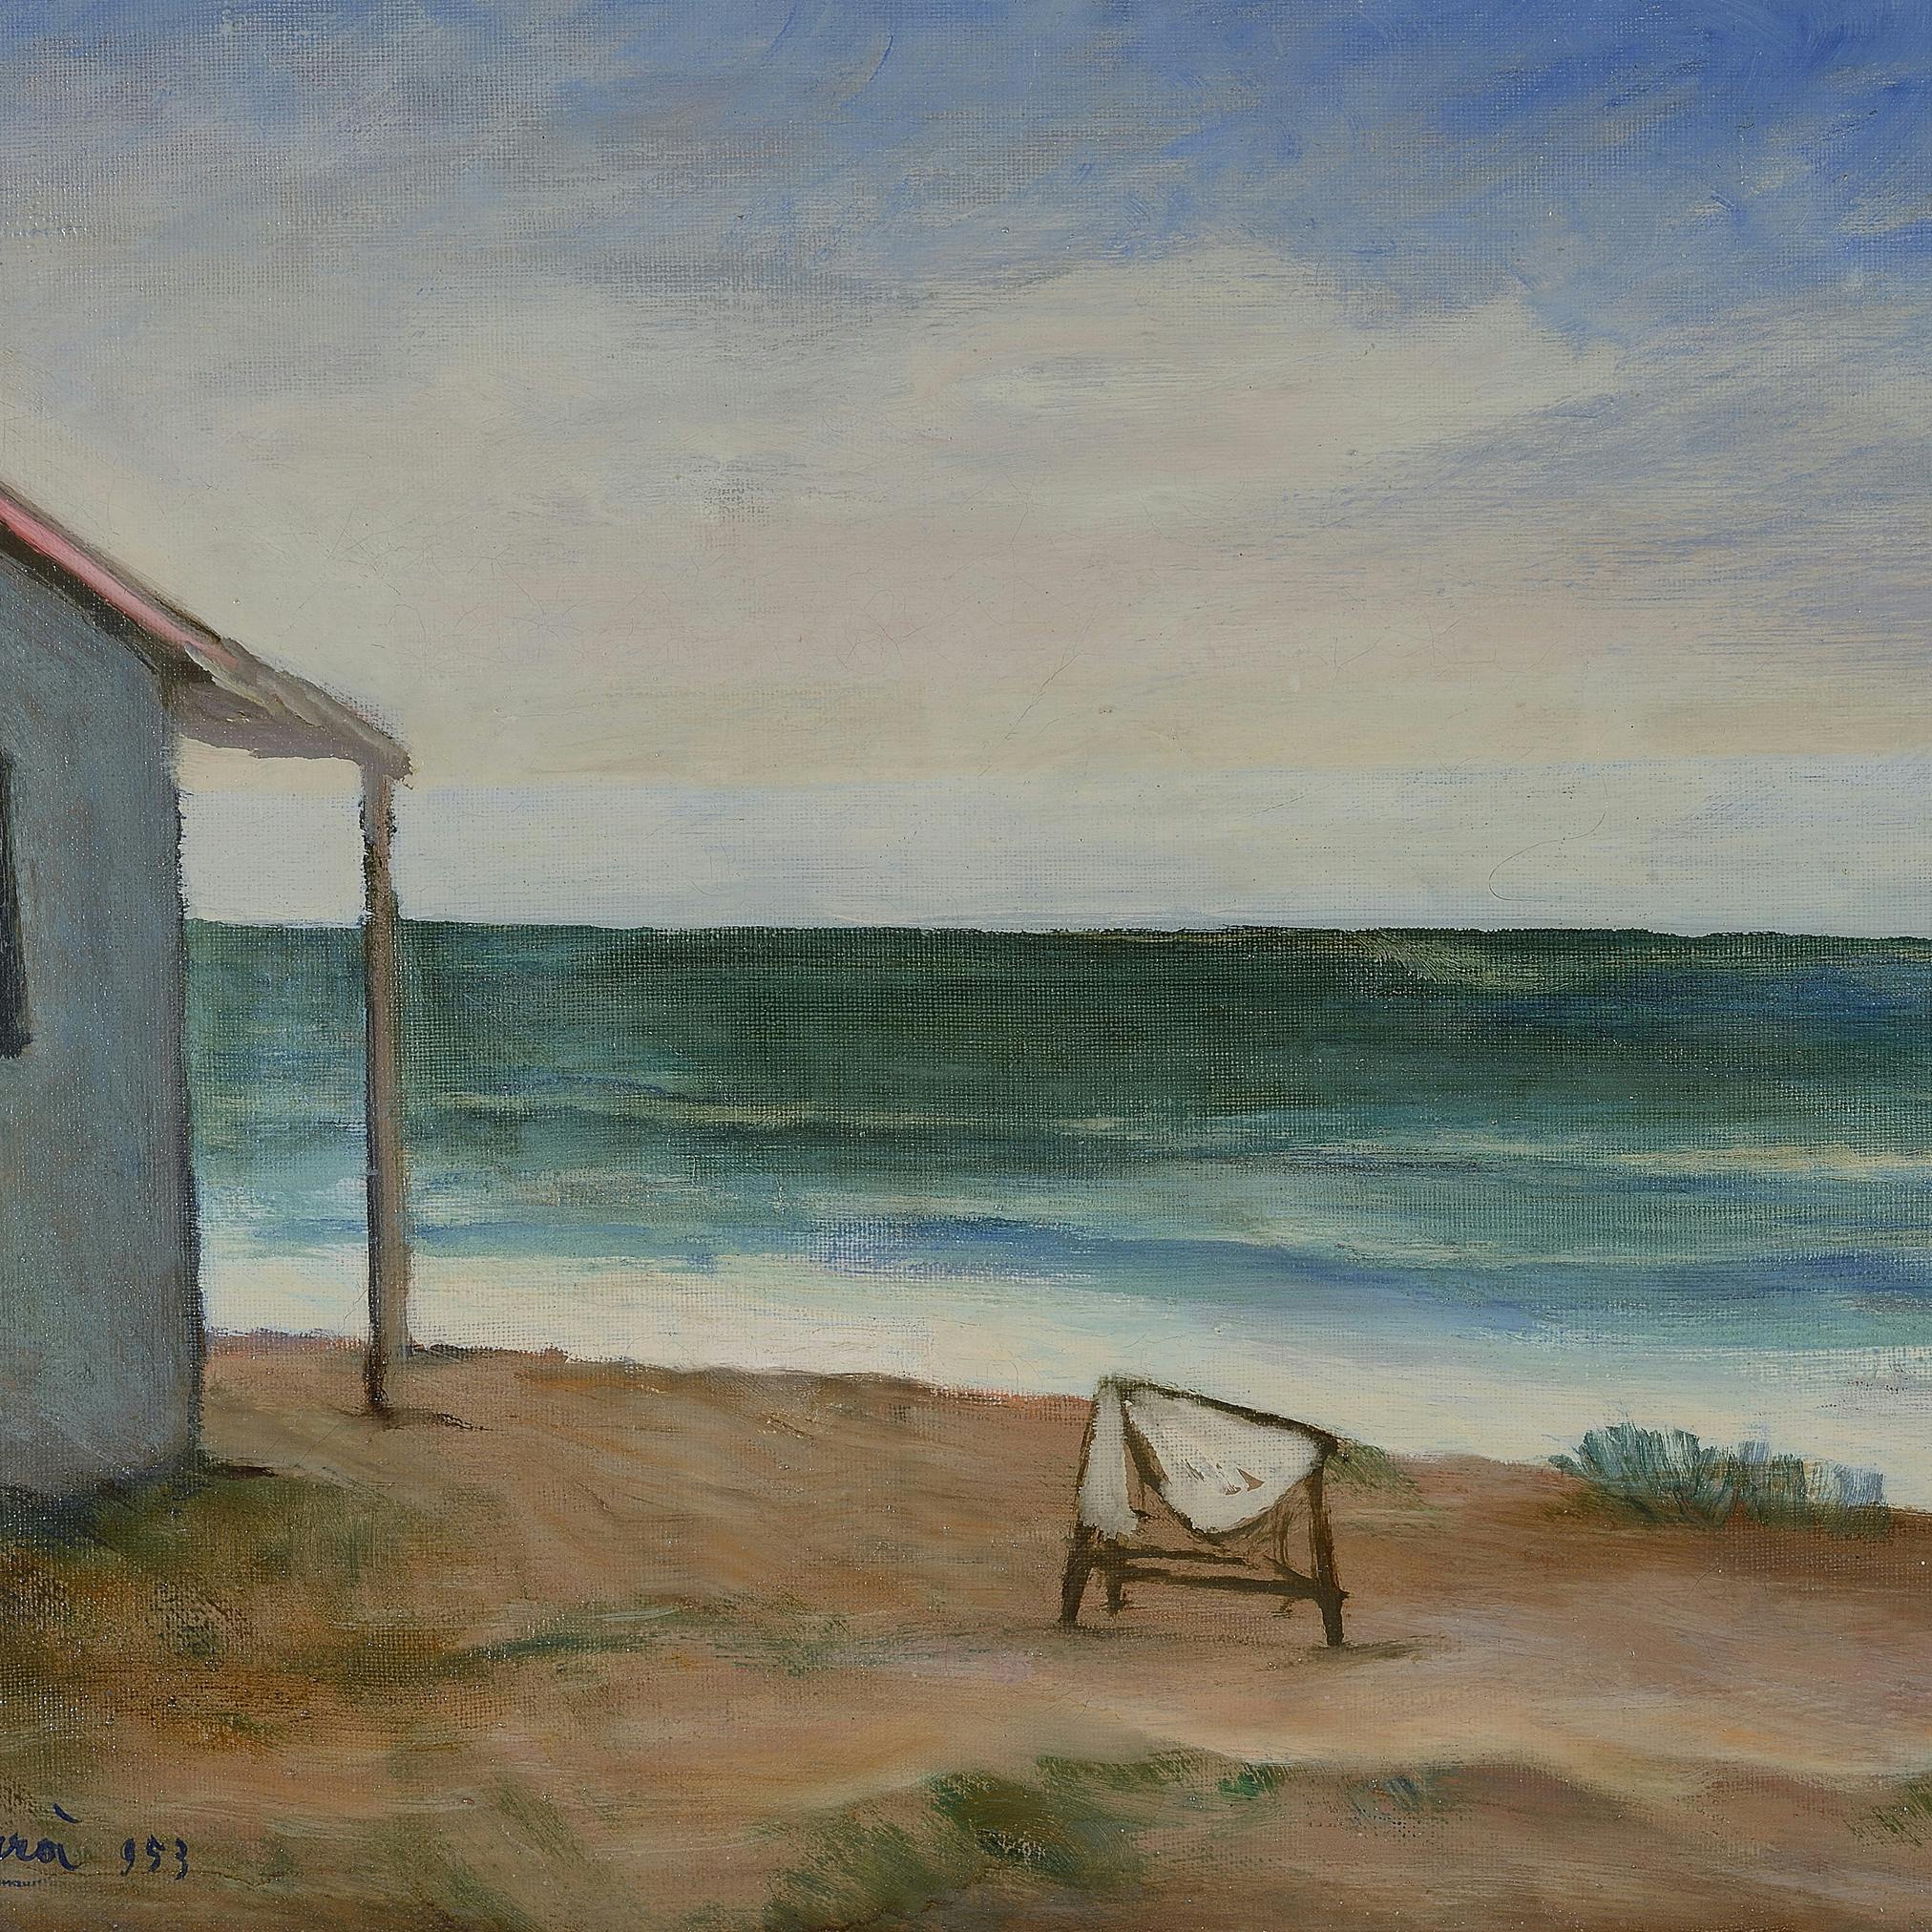 Carlo Carrà, Spiaggia, 1953